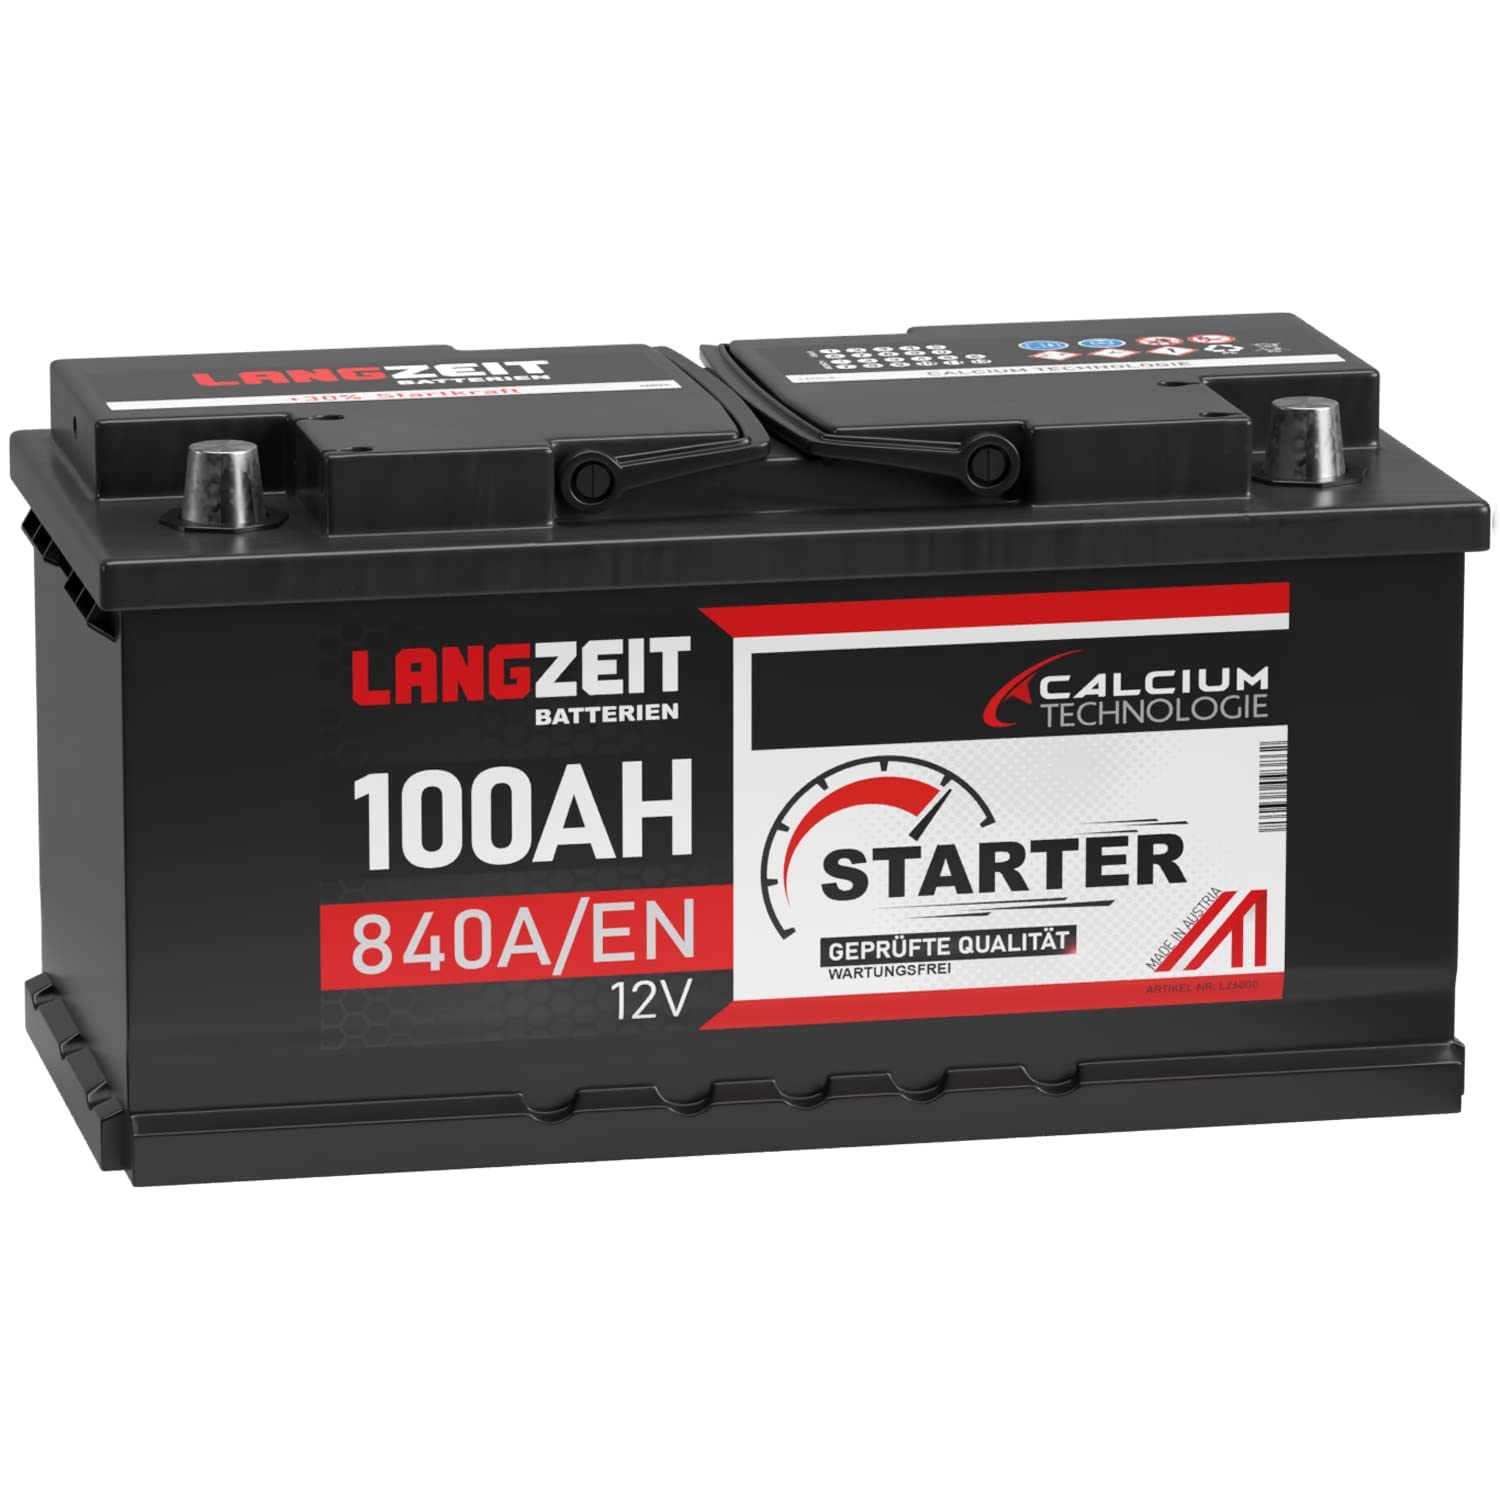 LANGZEIT STARTER Serie 12V 44Ah - 105Ah Autobatterie Starterbatterie PKW KFZ Batterie (100Ah) von LANGZEIT Batterien